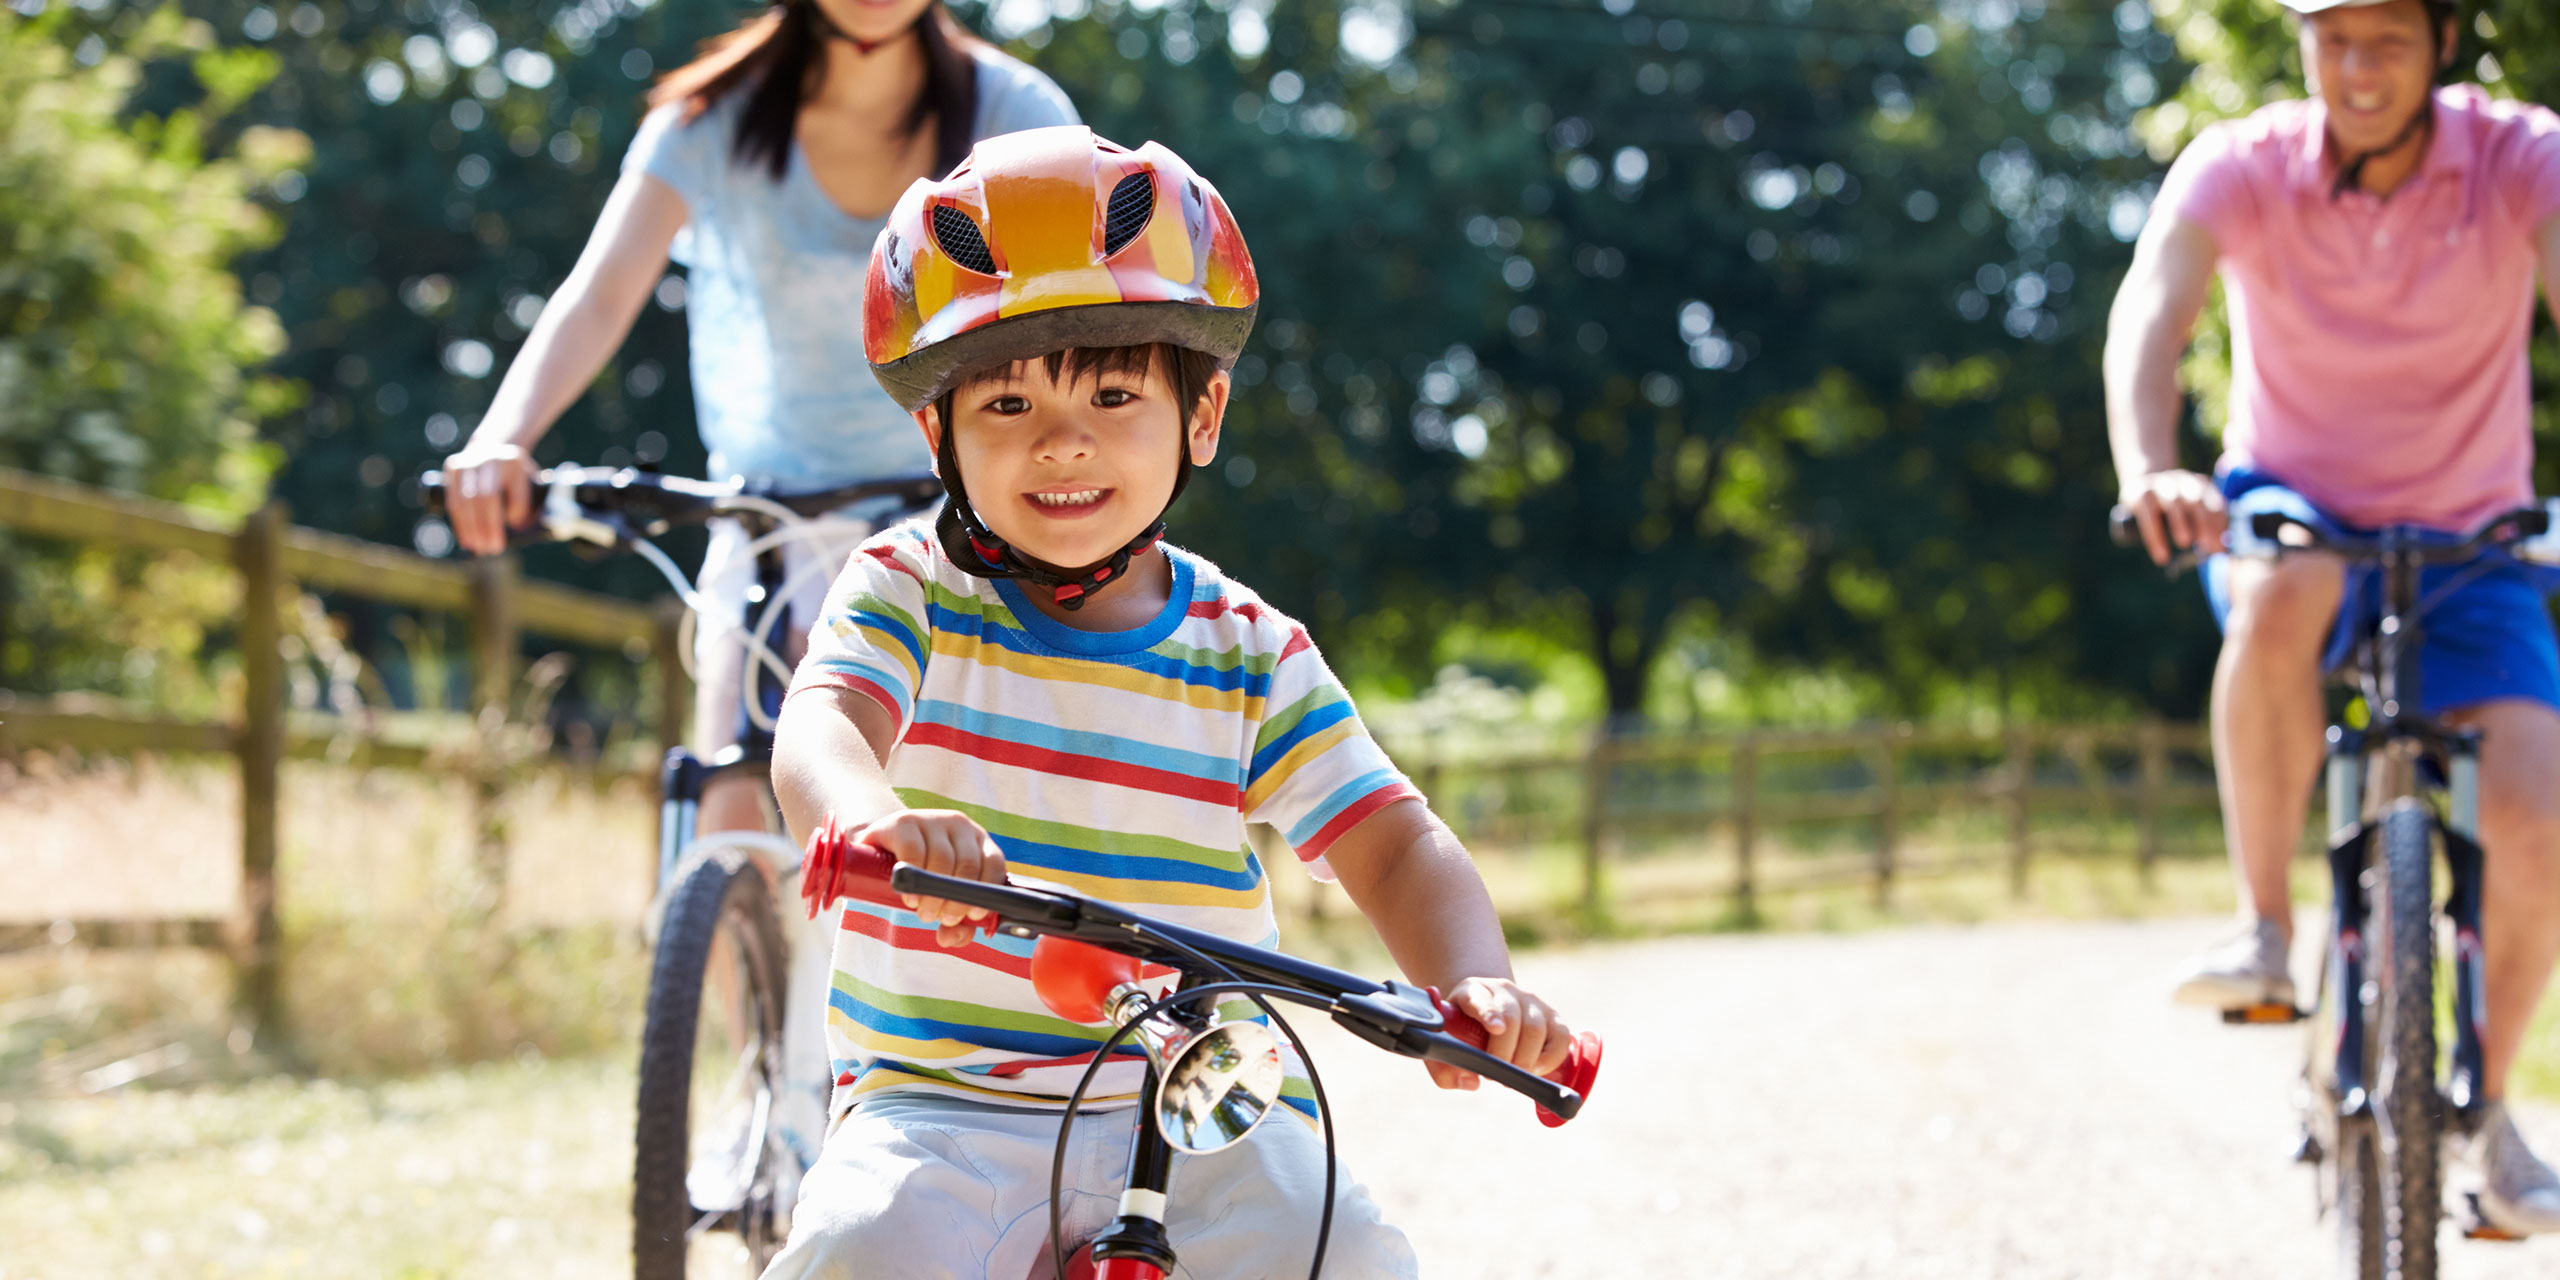 Child Biking; Courtesy of Monkey Business Images/Shutterstock.com